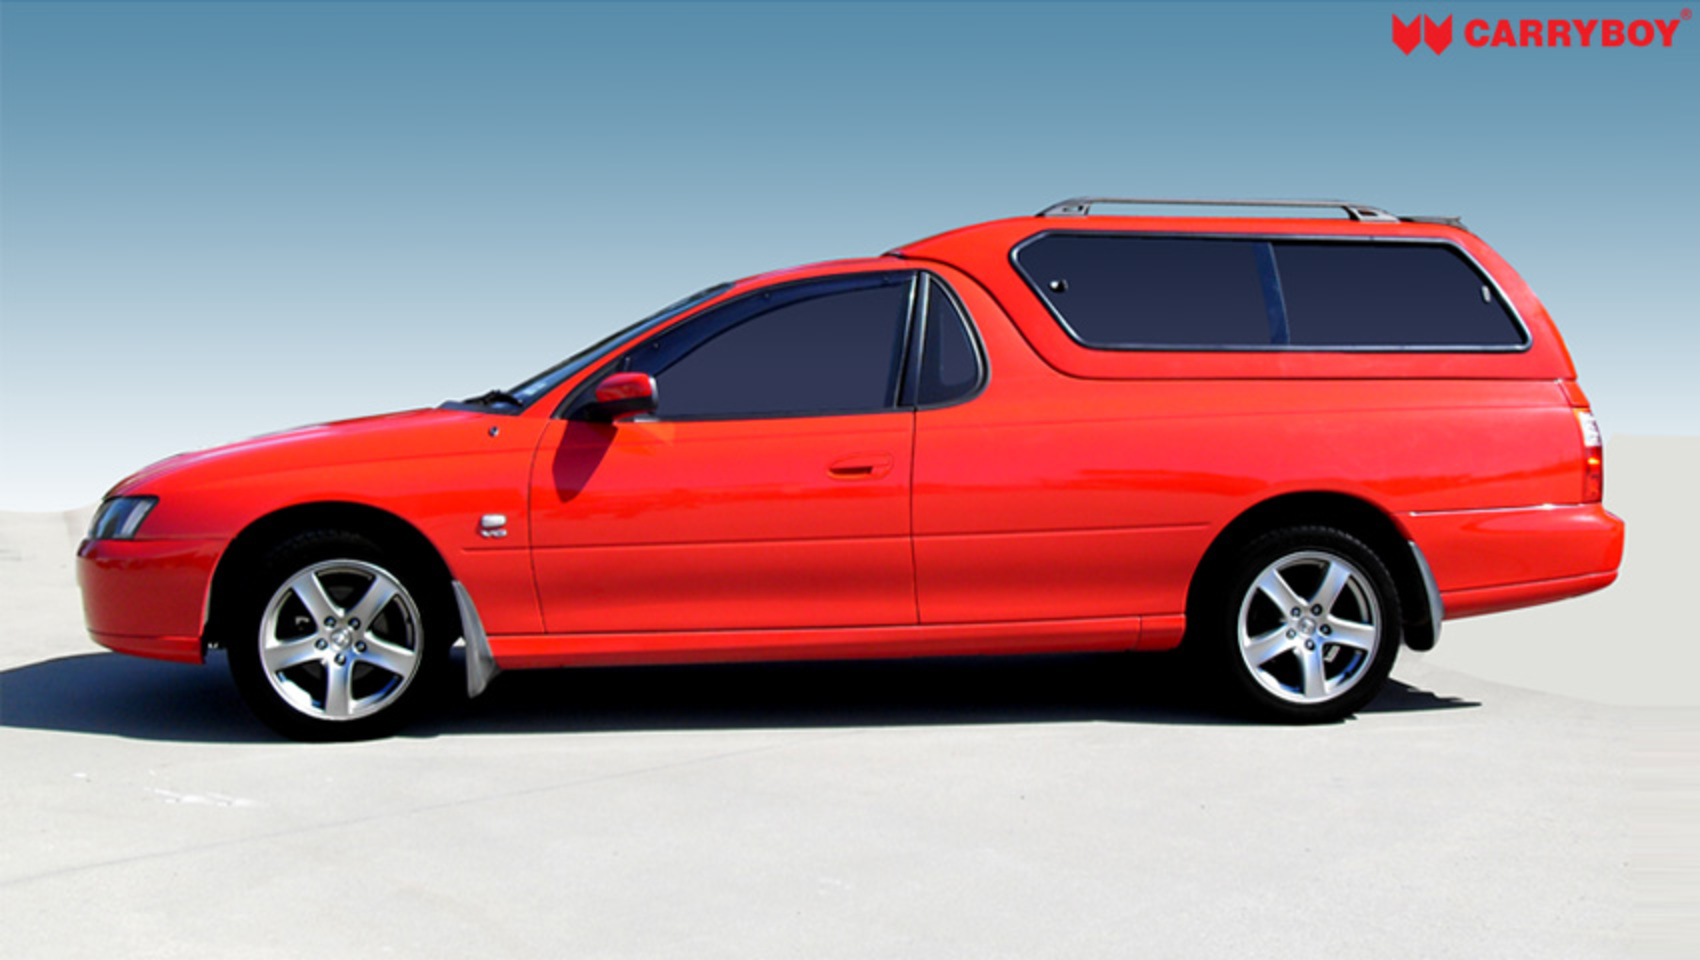 Holden VU S Utility - cars catalog, specs, features, photos, videos, review,